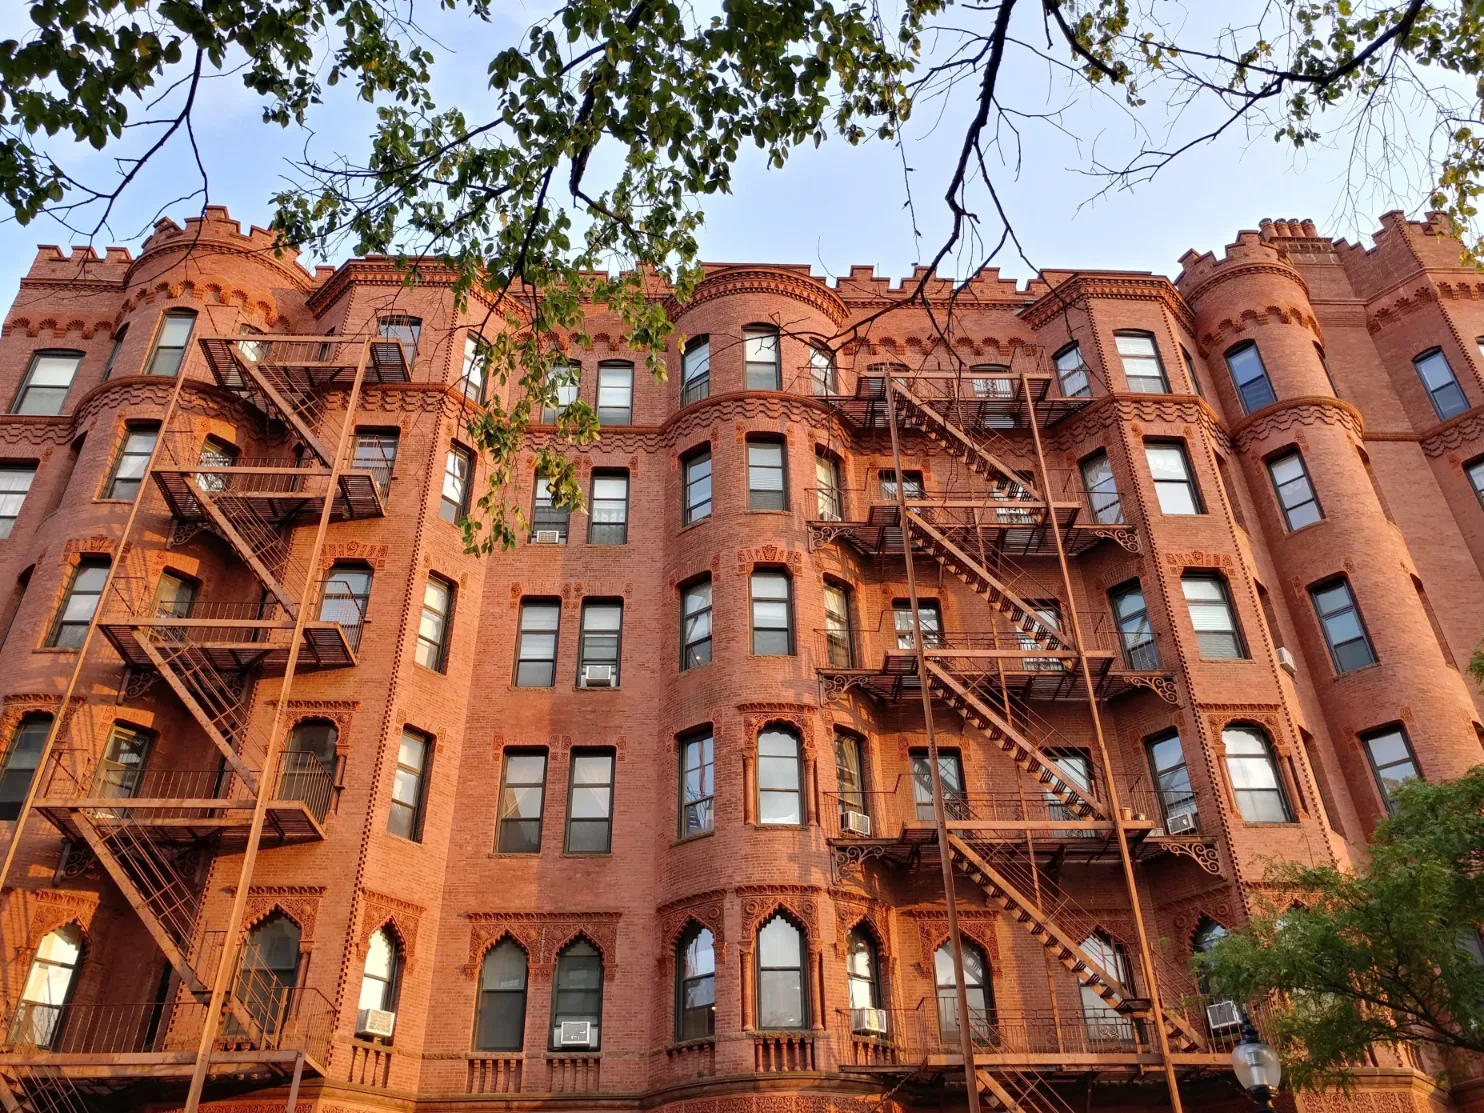 Beacon Hill Boston Apartments: Average Prices And Sizes Revealed